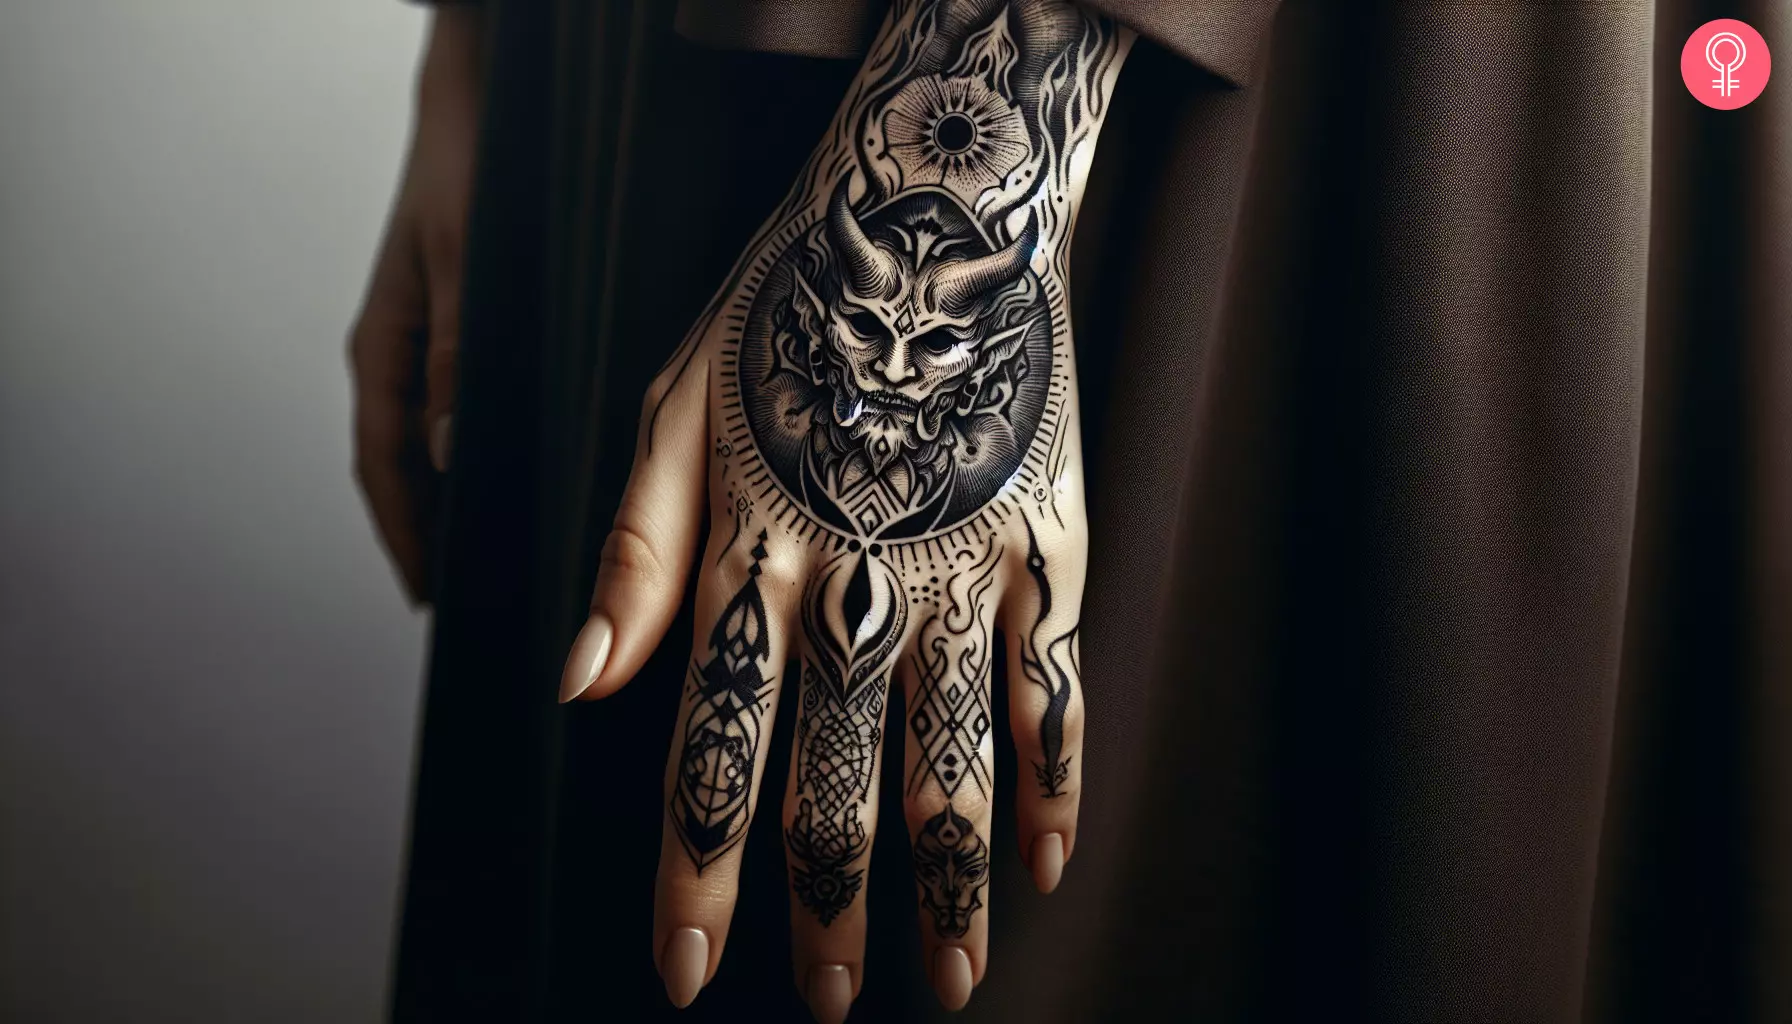 Demon tattoo on the hand